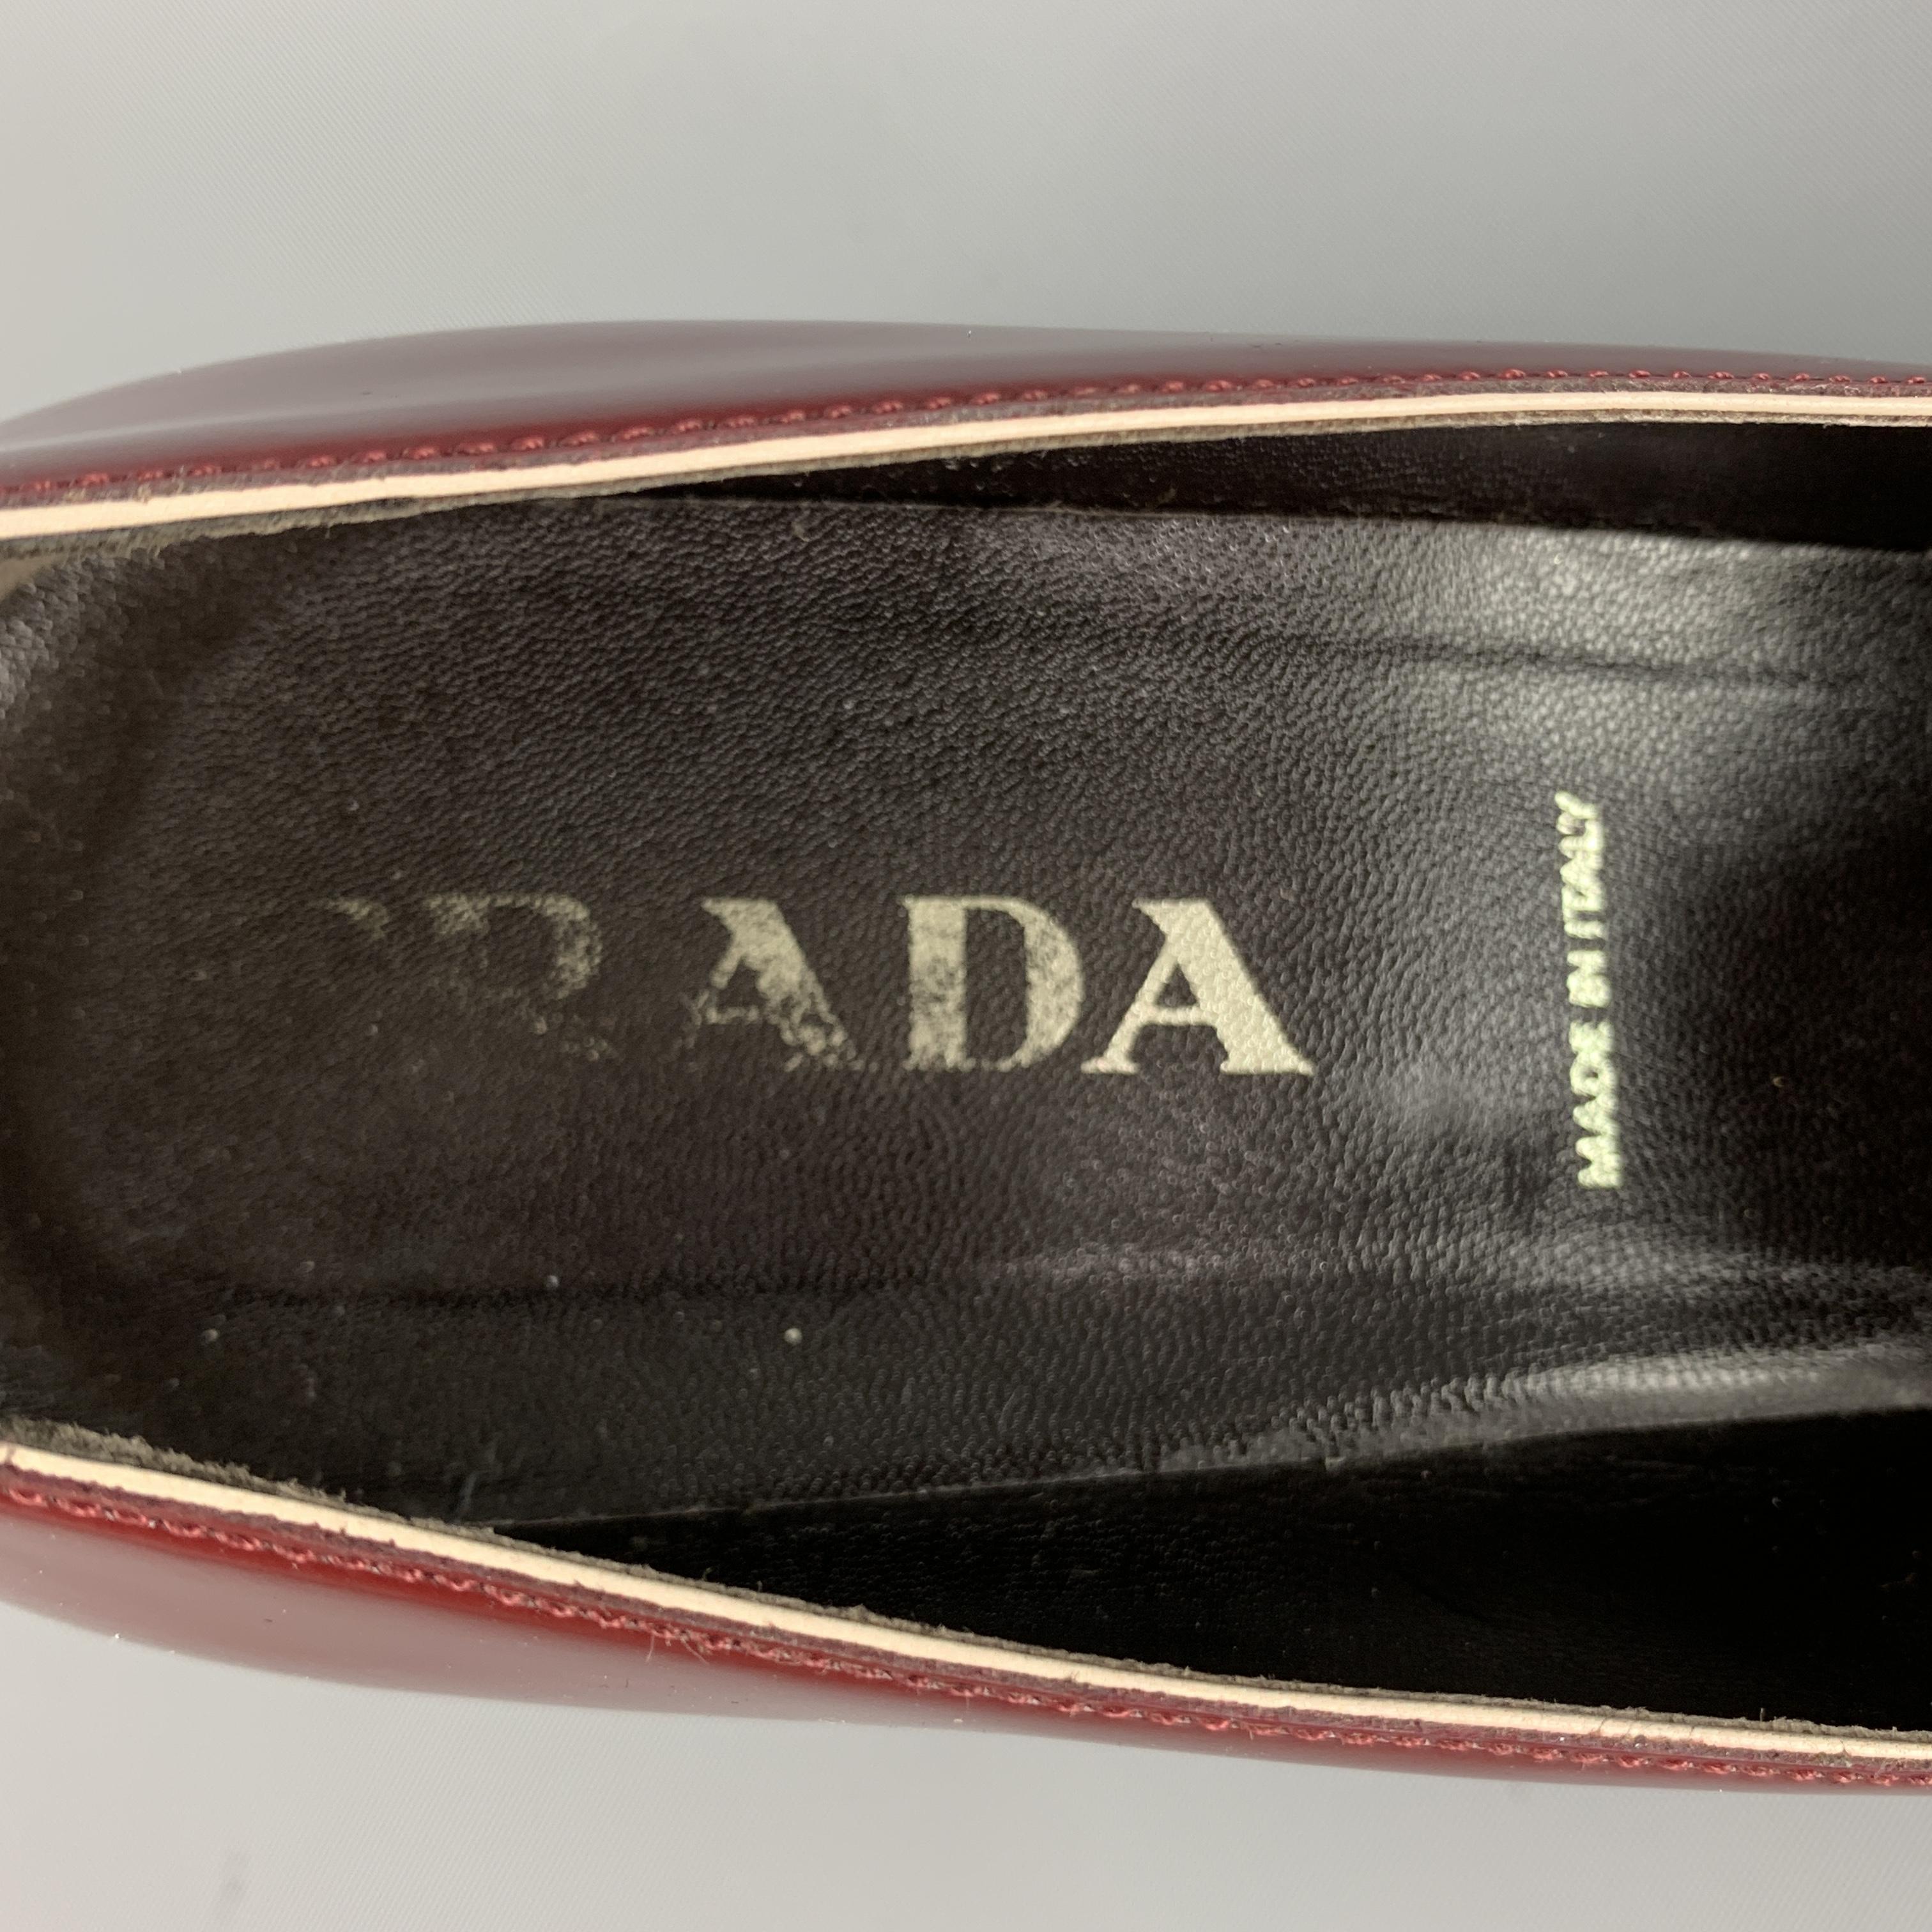 PRADA Size 9.5 Burgundy Leather Loafer Pumps 3